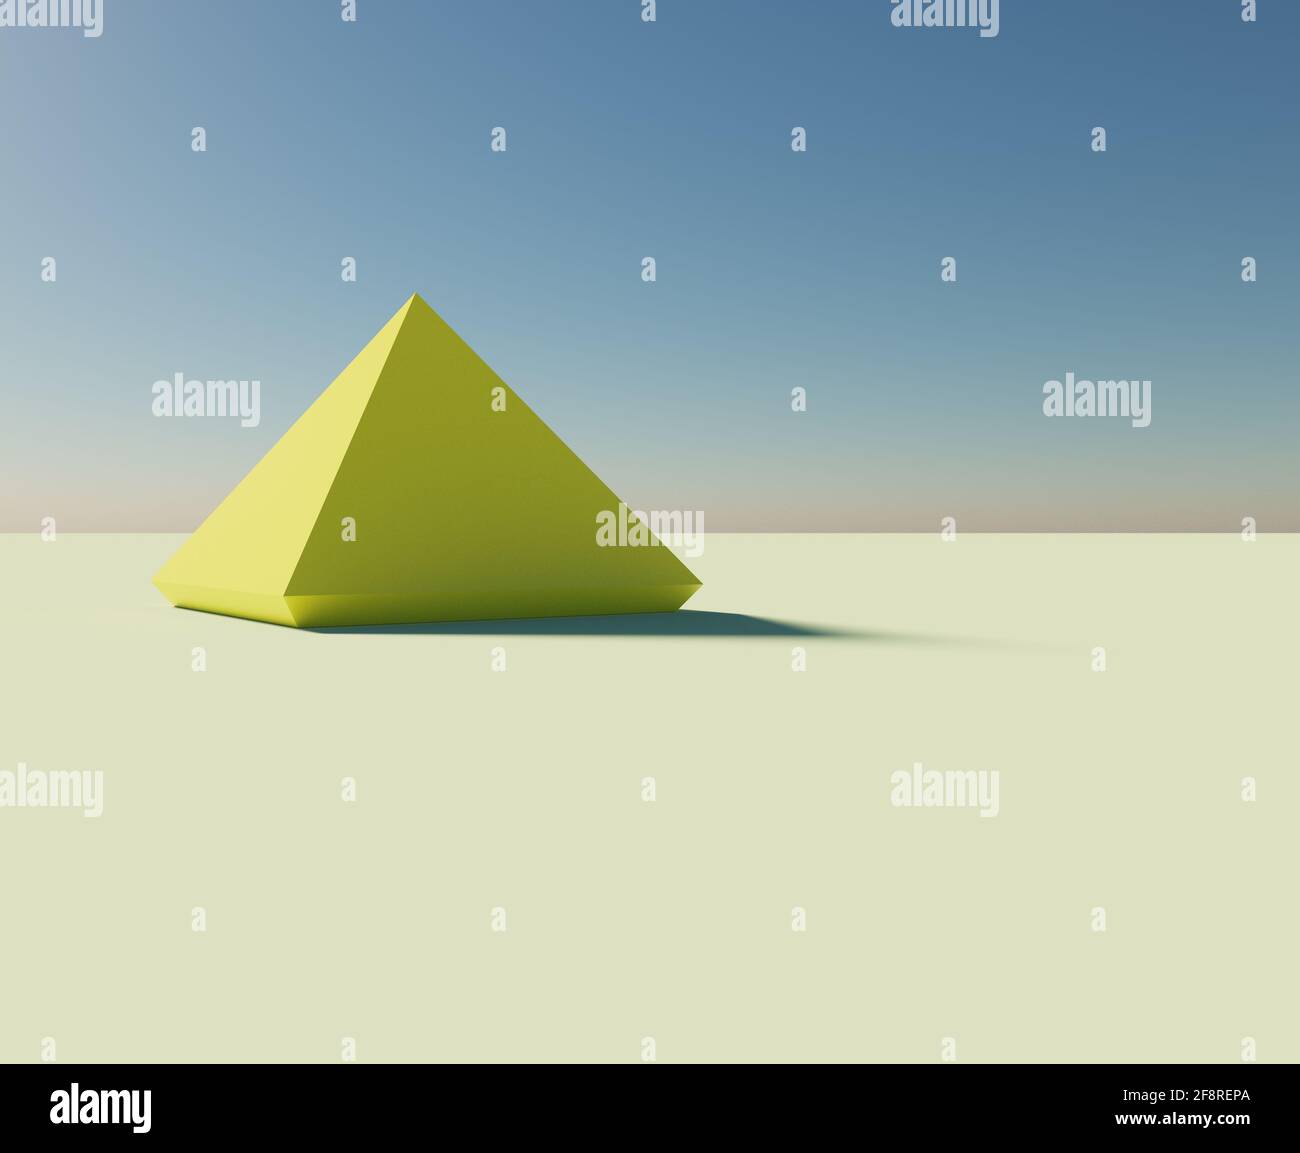 Egyptian pyramid inspired illustration. 3D rendered minimalistic pyramid shape illustration on yellow sand pastel colored background Stock Photo